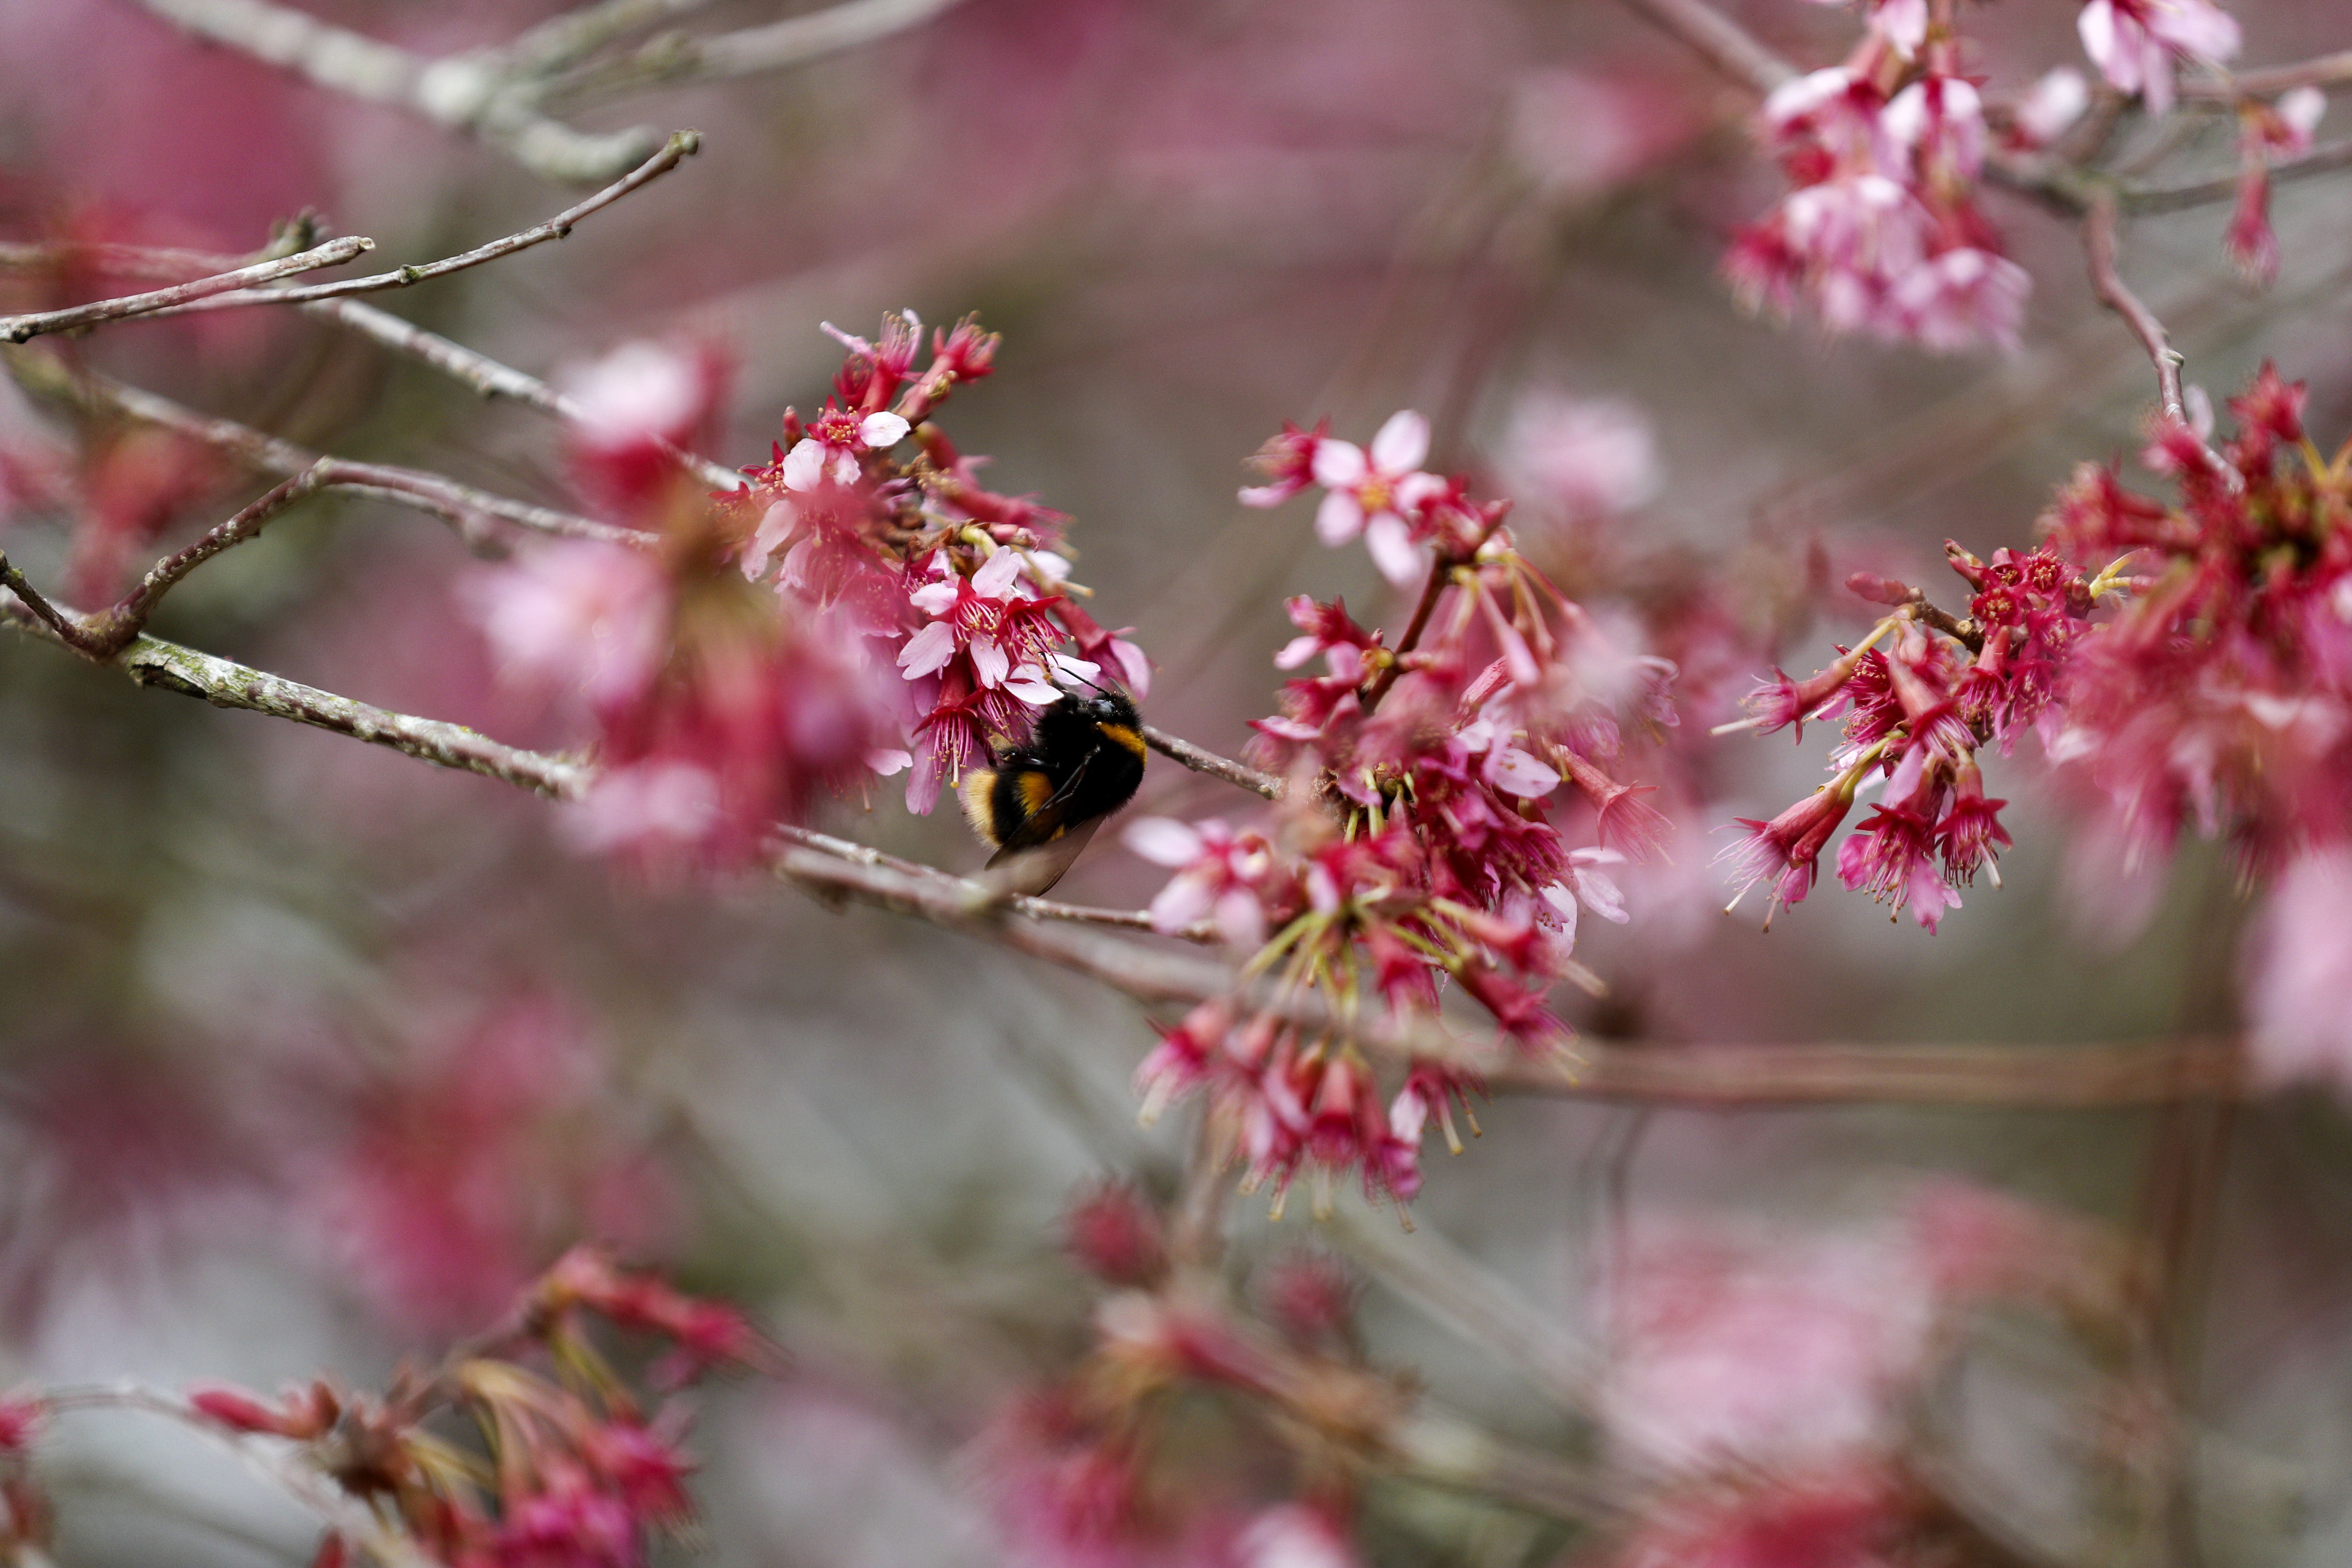 Flowering Cherry Trees: Grow an Ornamental Cherry Blossom Tree